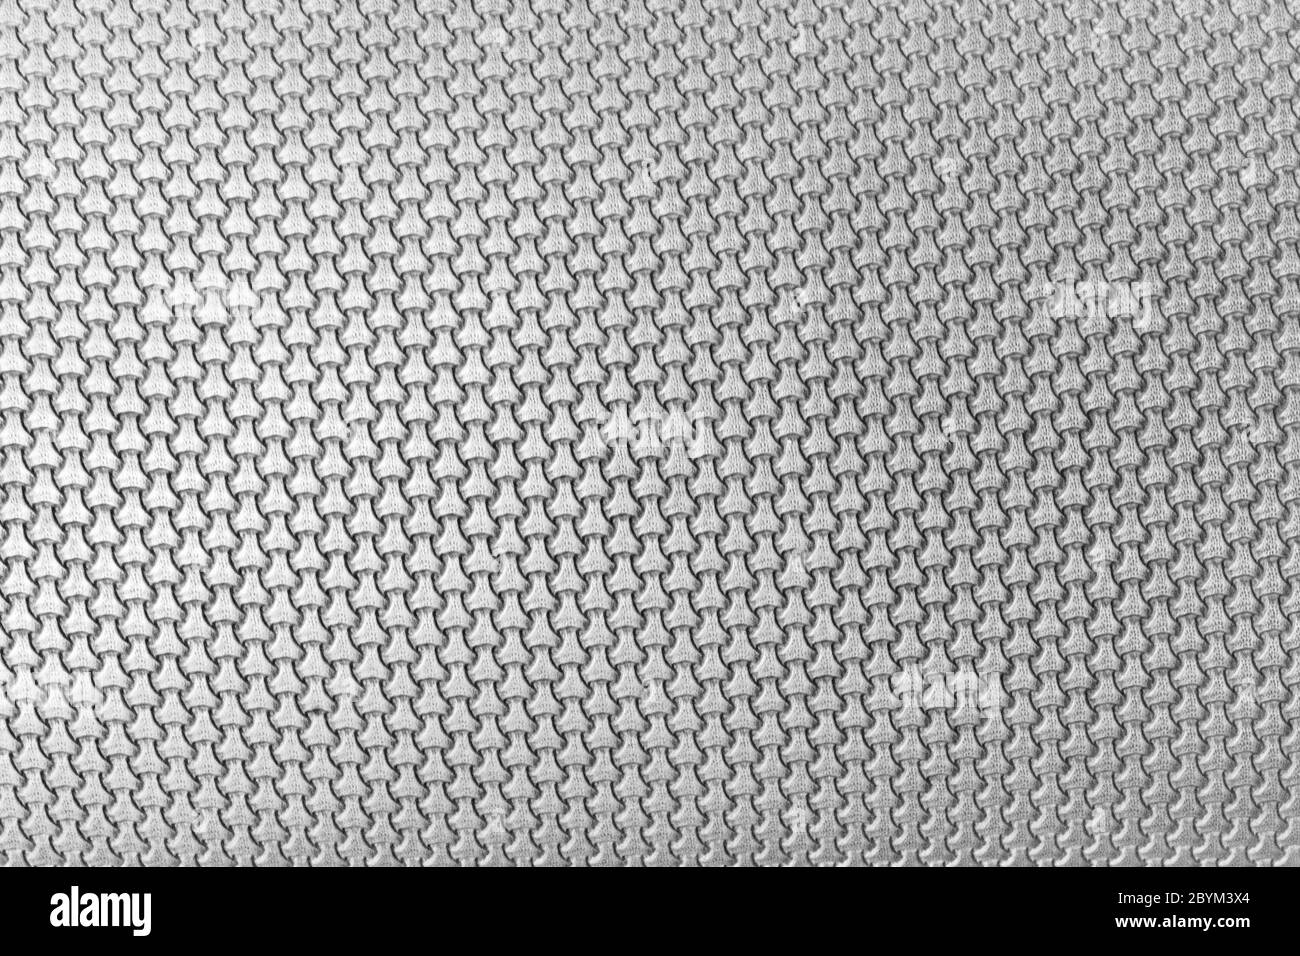 imitation metal surface texture background Stock Photo